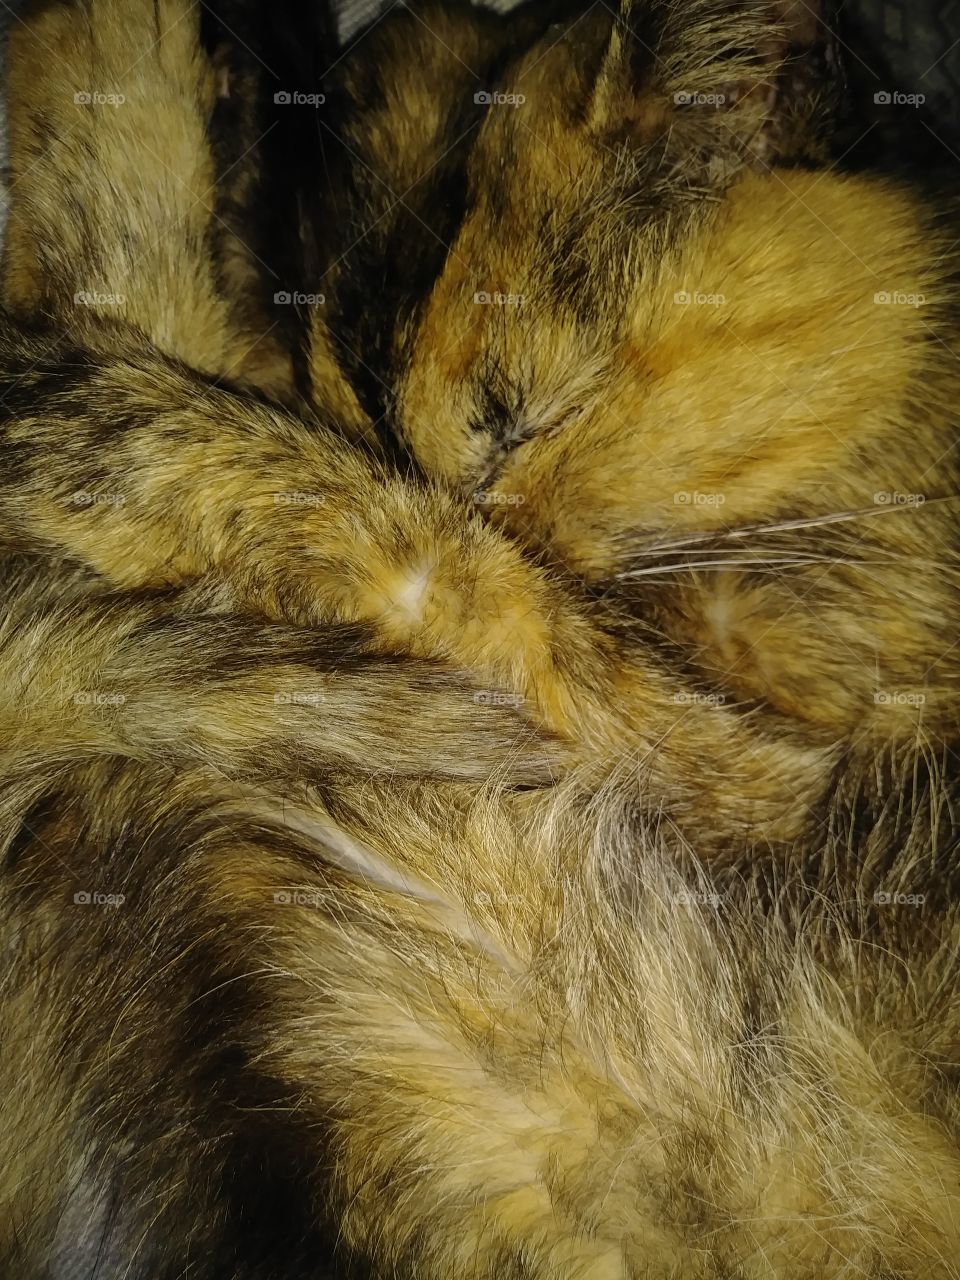 Closeup calico cat orange and black curled up sleeping